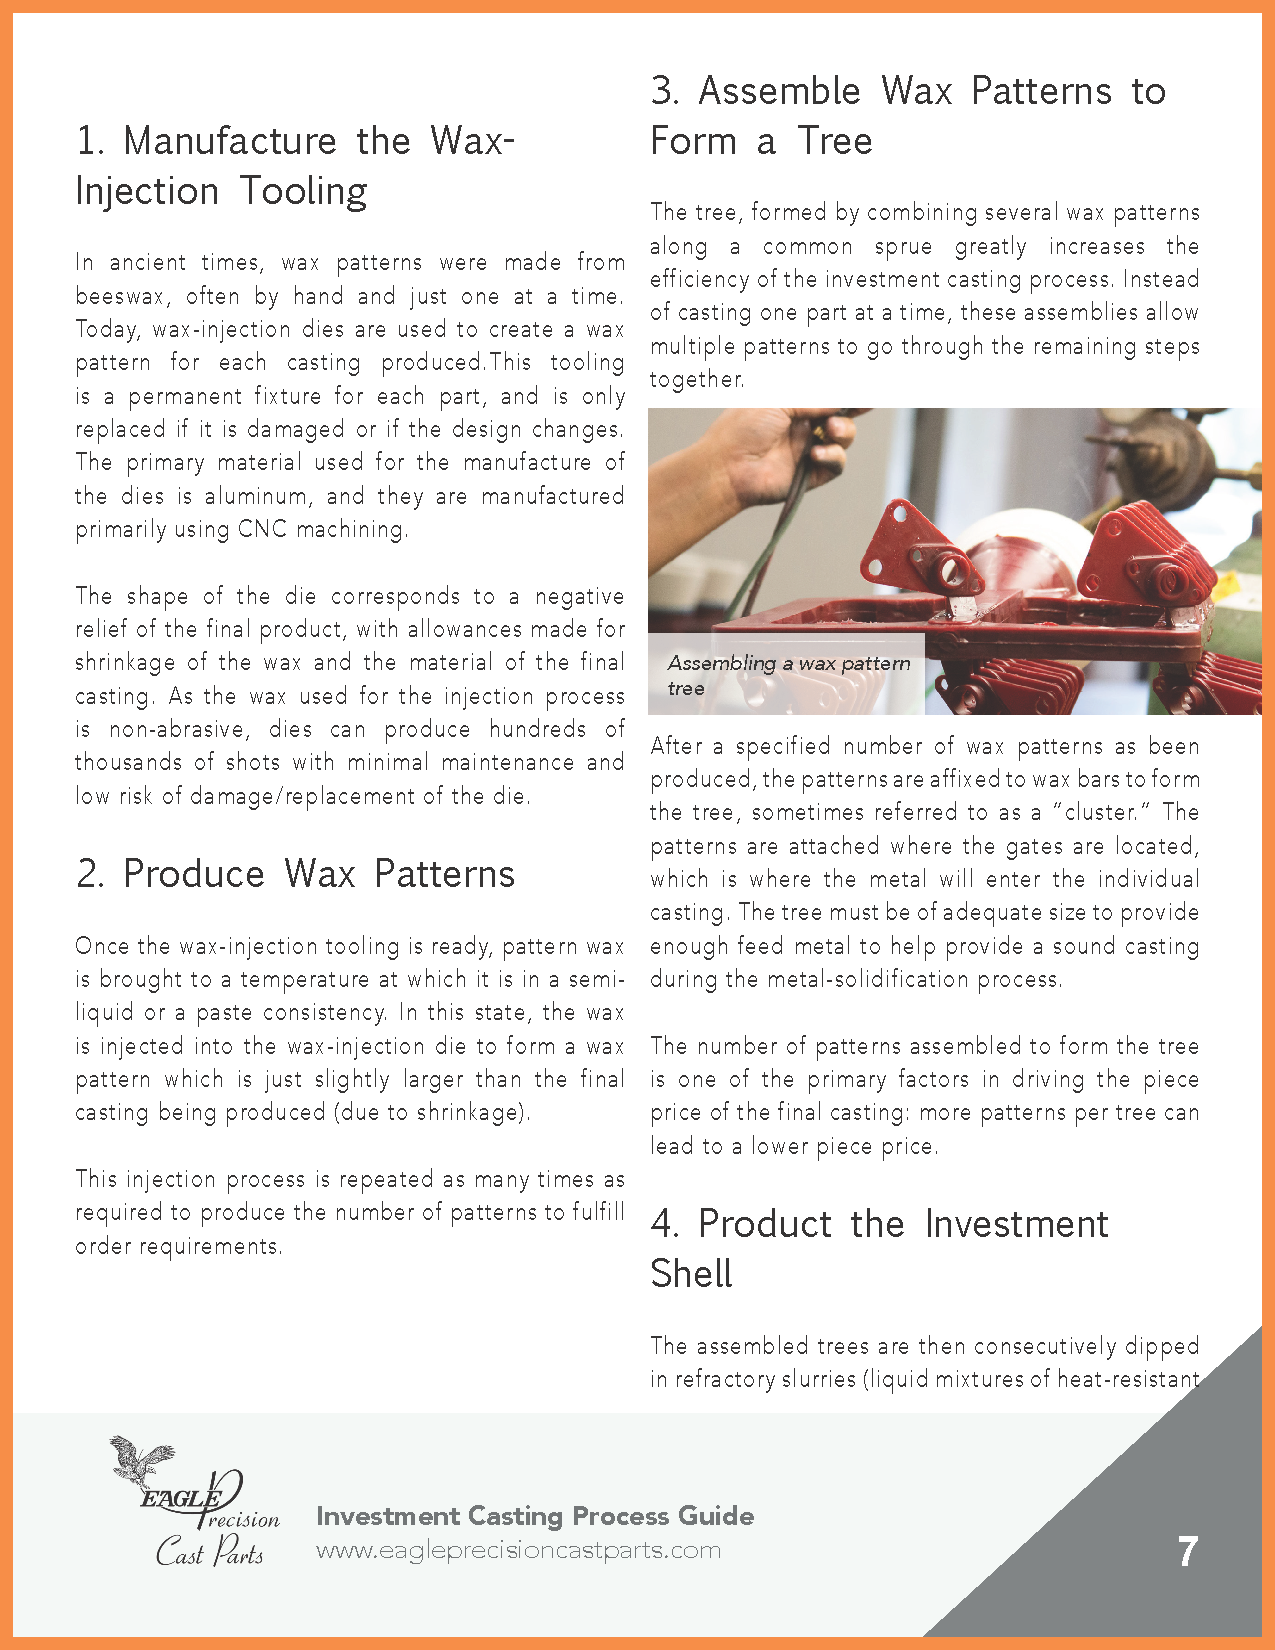 Eagle Precision - Investment Casting Process Guide(图7)